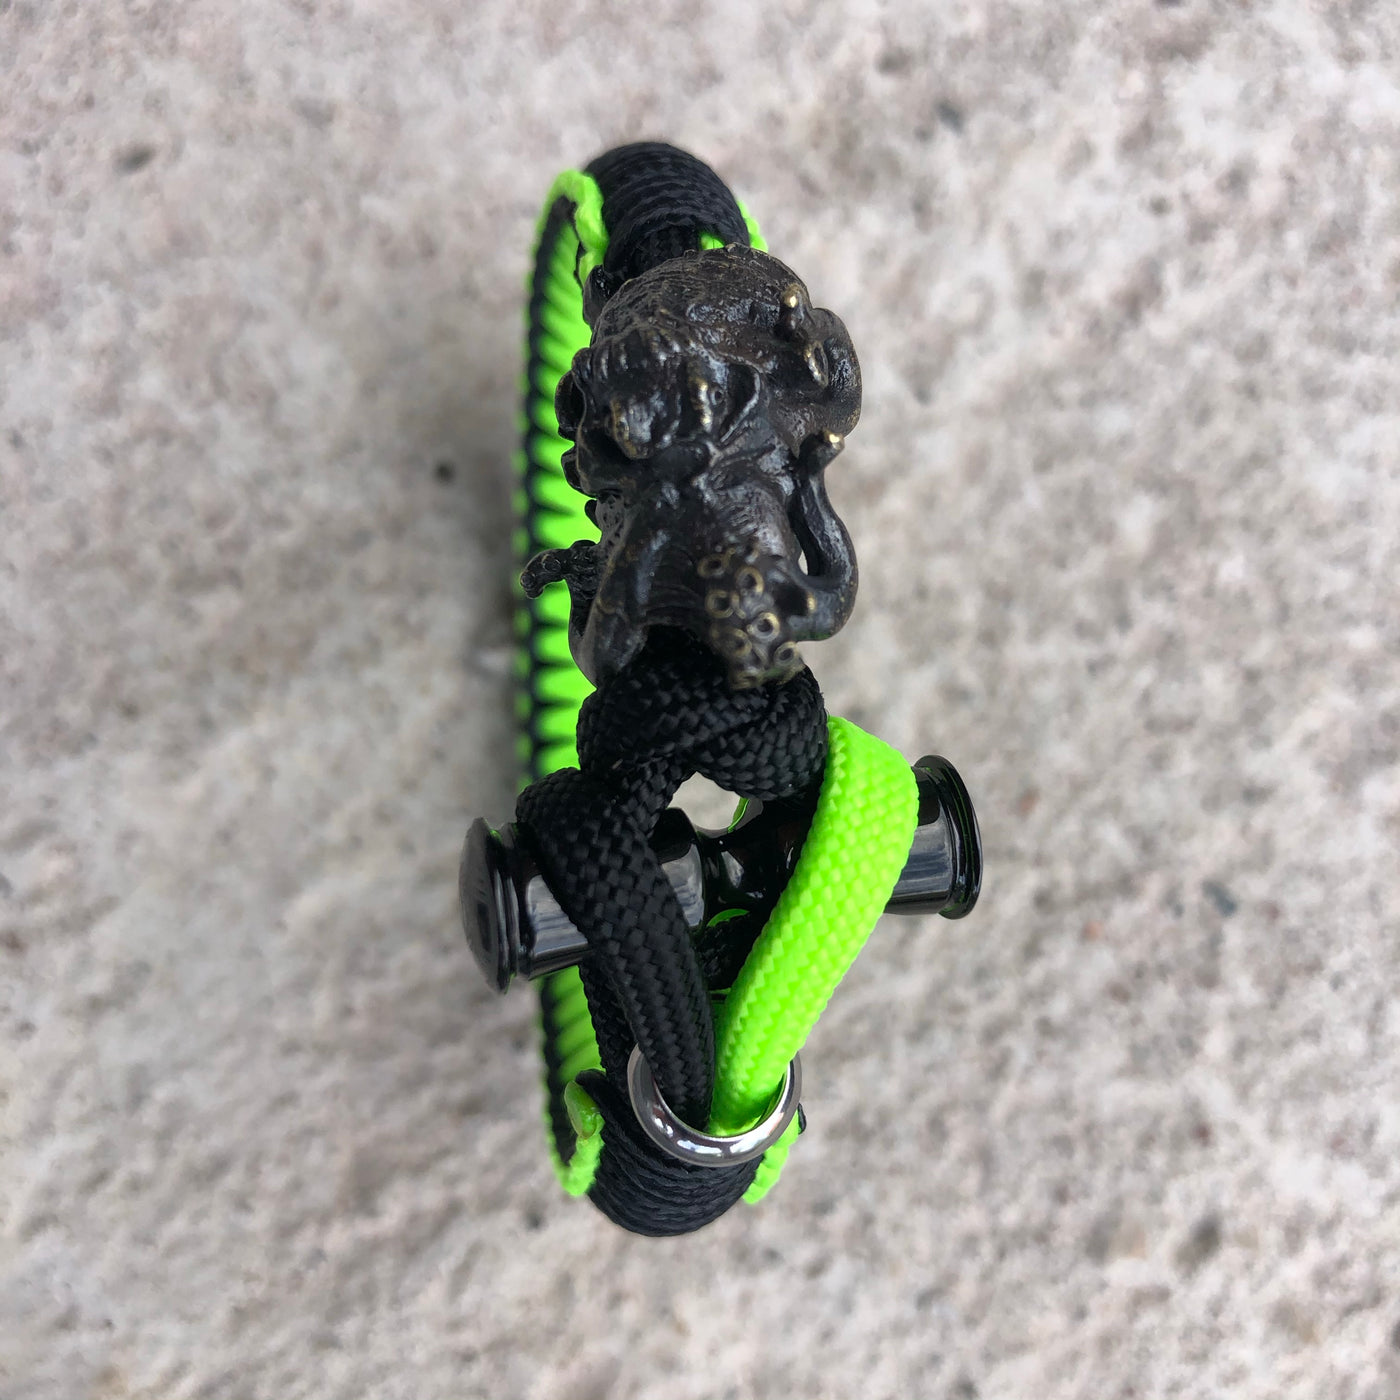 The Kraken microcord bracelet